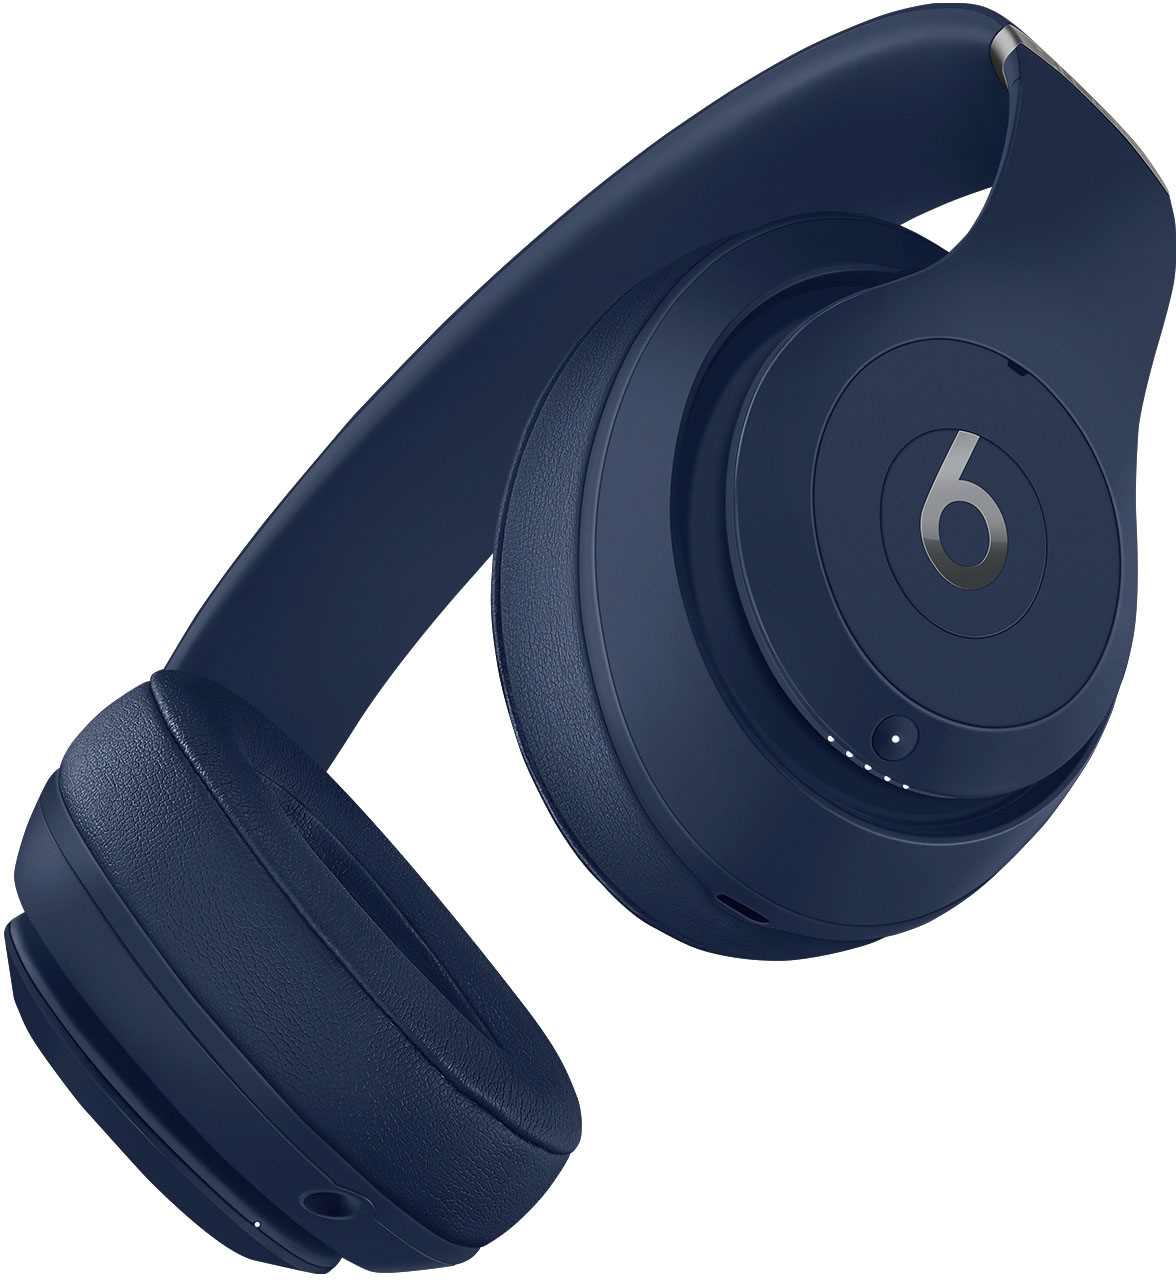 Beats by Dr. Dre Solo3 Wireless Headphones MRRH2LL/A Pop Blue - US